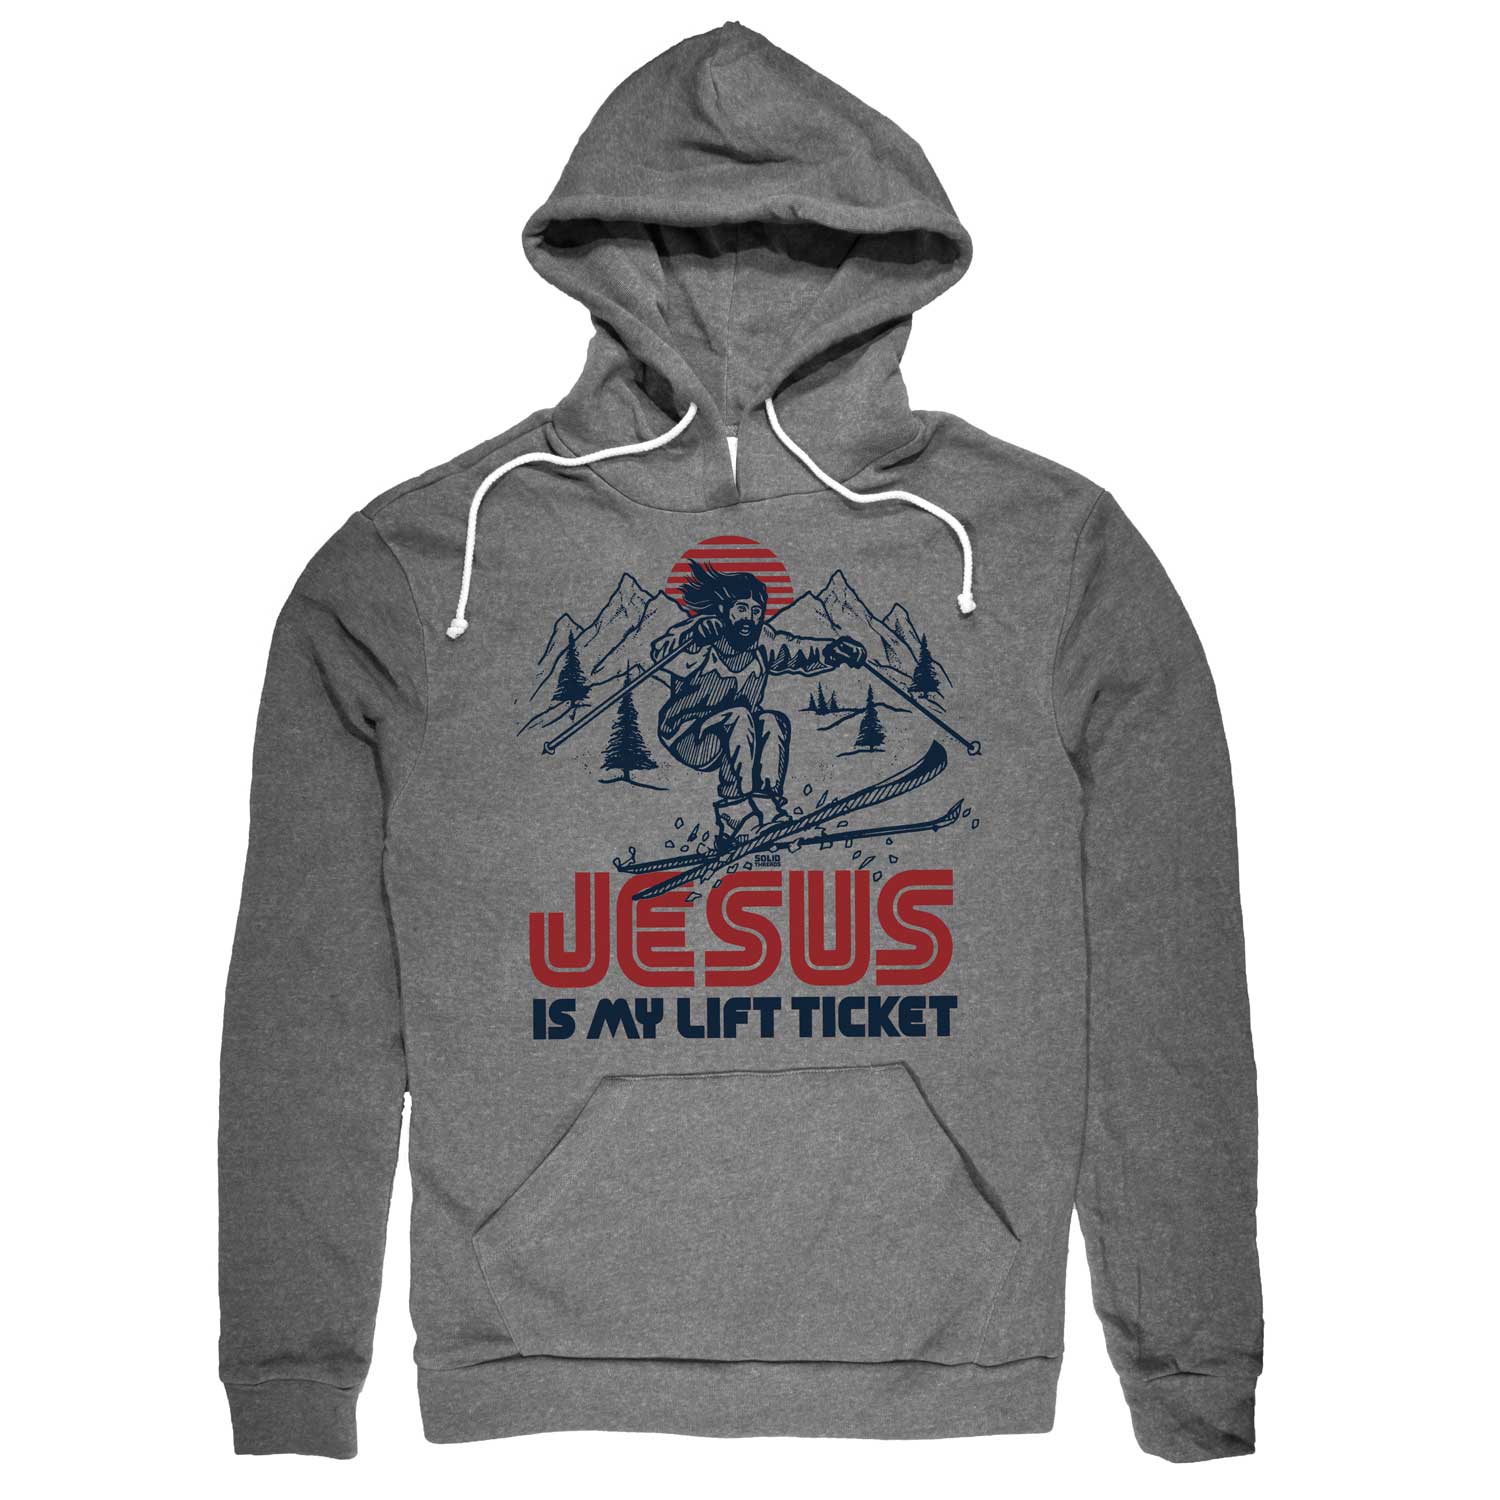 Unisex Jesus is My Lift Ticket Cool Vintage Graphic Hoodie | Funny Skiing Sweatshirt | Solid Threads